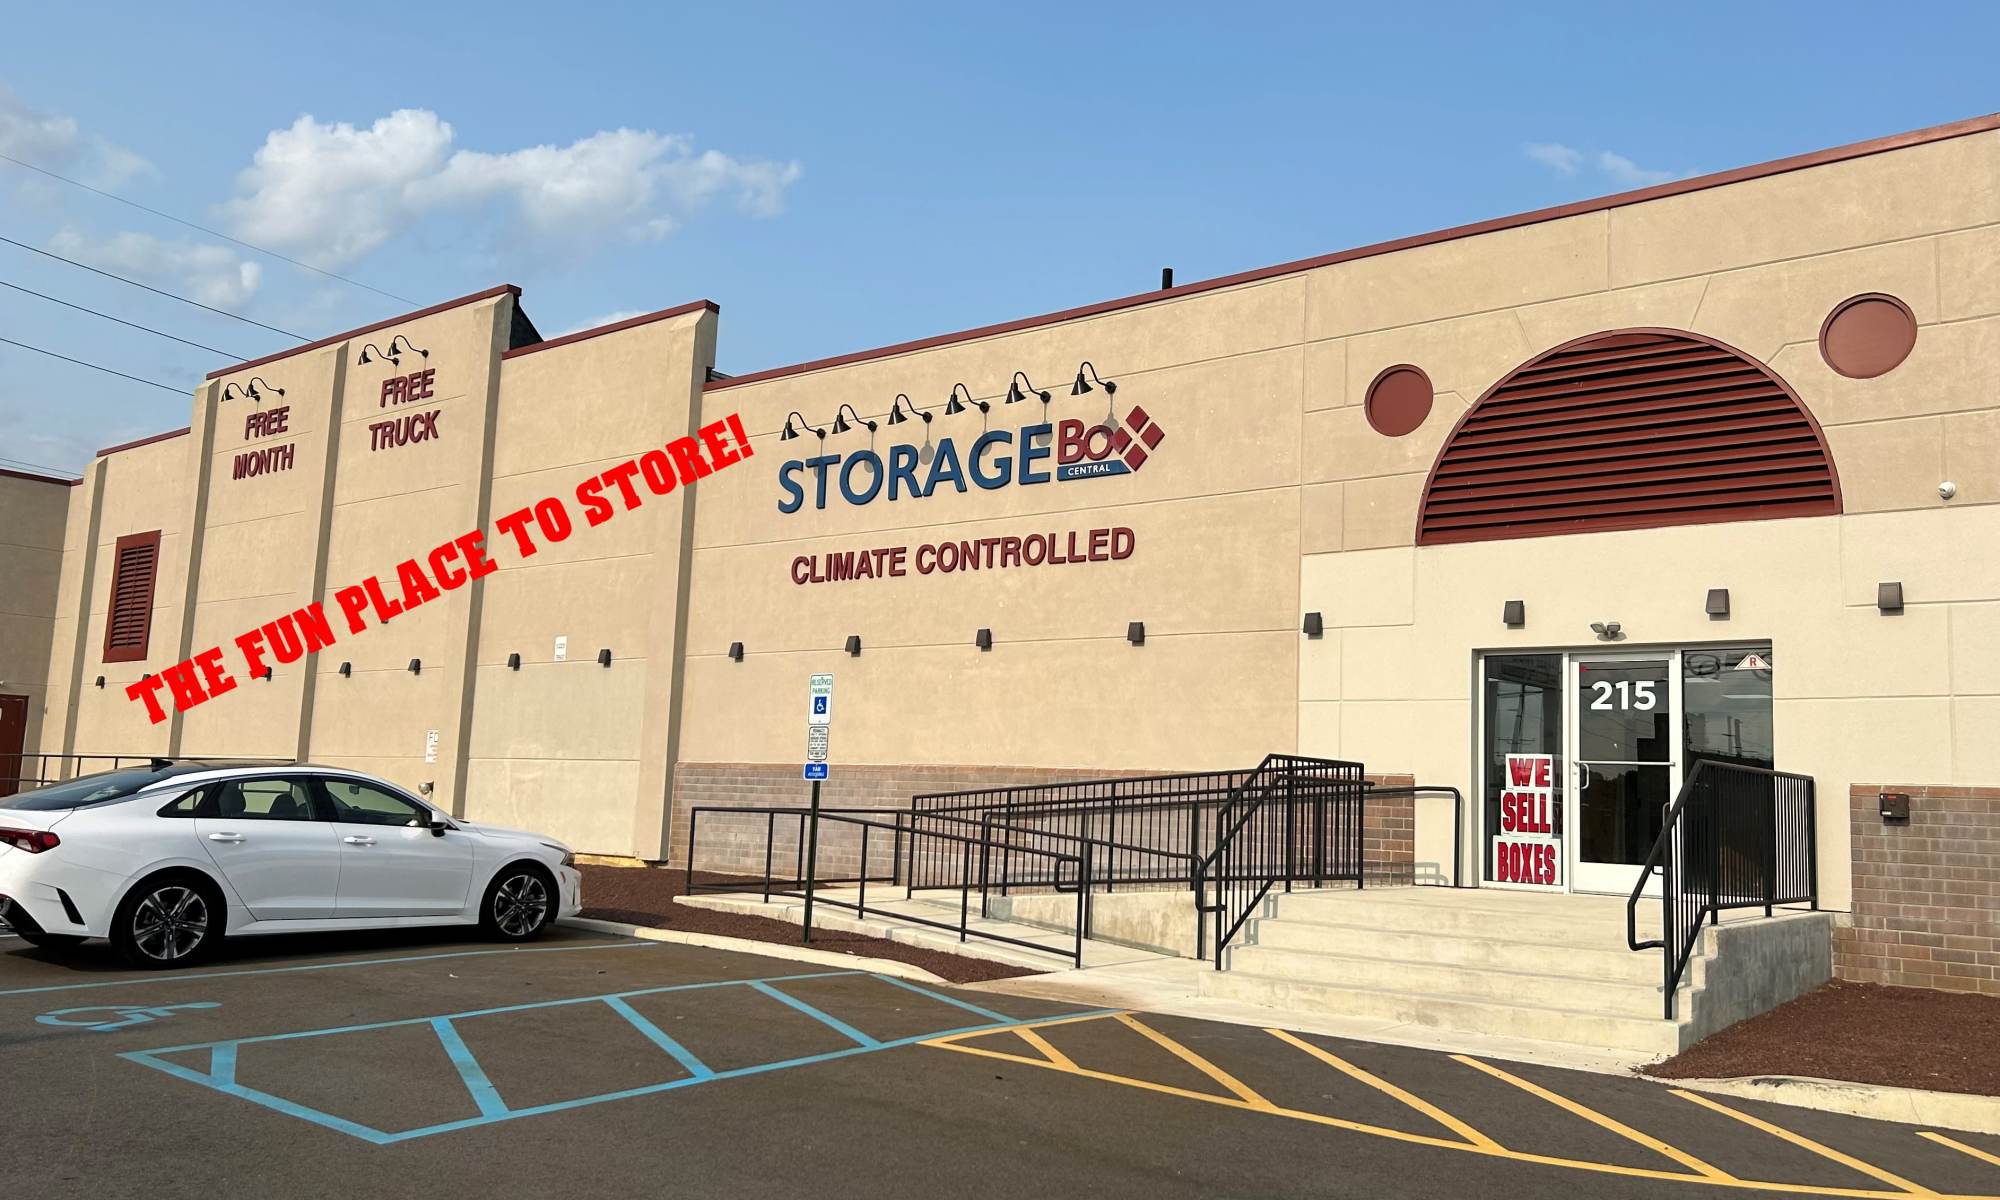 Self Storage at Storage Box Central in Vineland, New Jersey